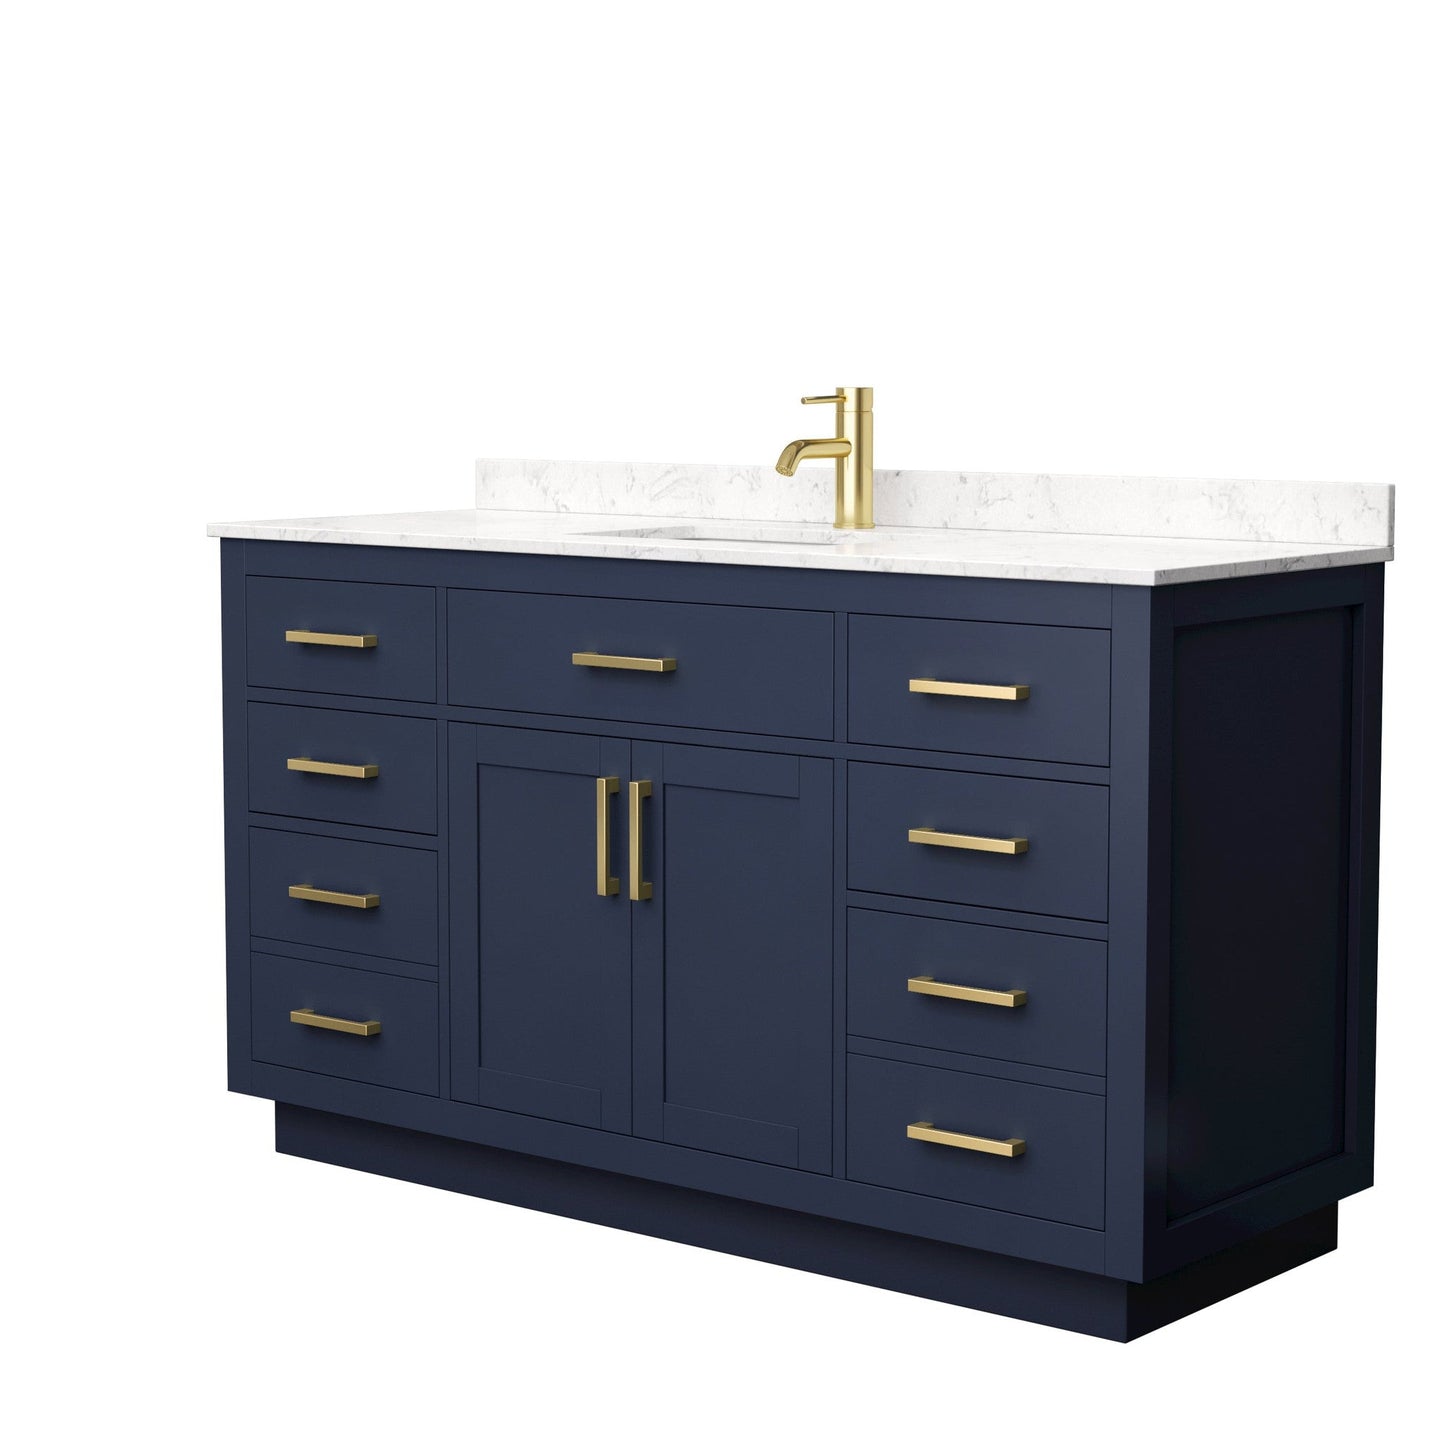 Beckett 60" Single Bathroom Vanity With Toe Kick in Dark Blue, Carrara Cultured Marble Countertop, Undermount Square Sink, Brushed Gold Trim